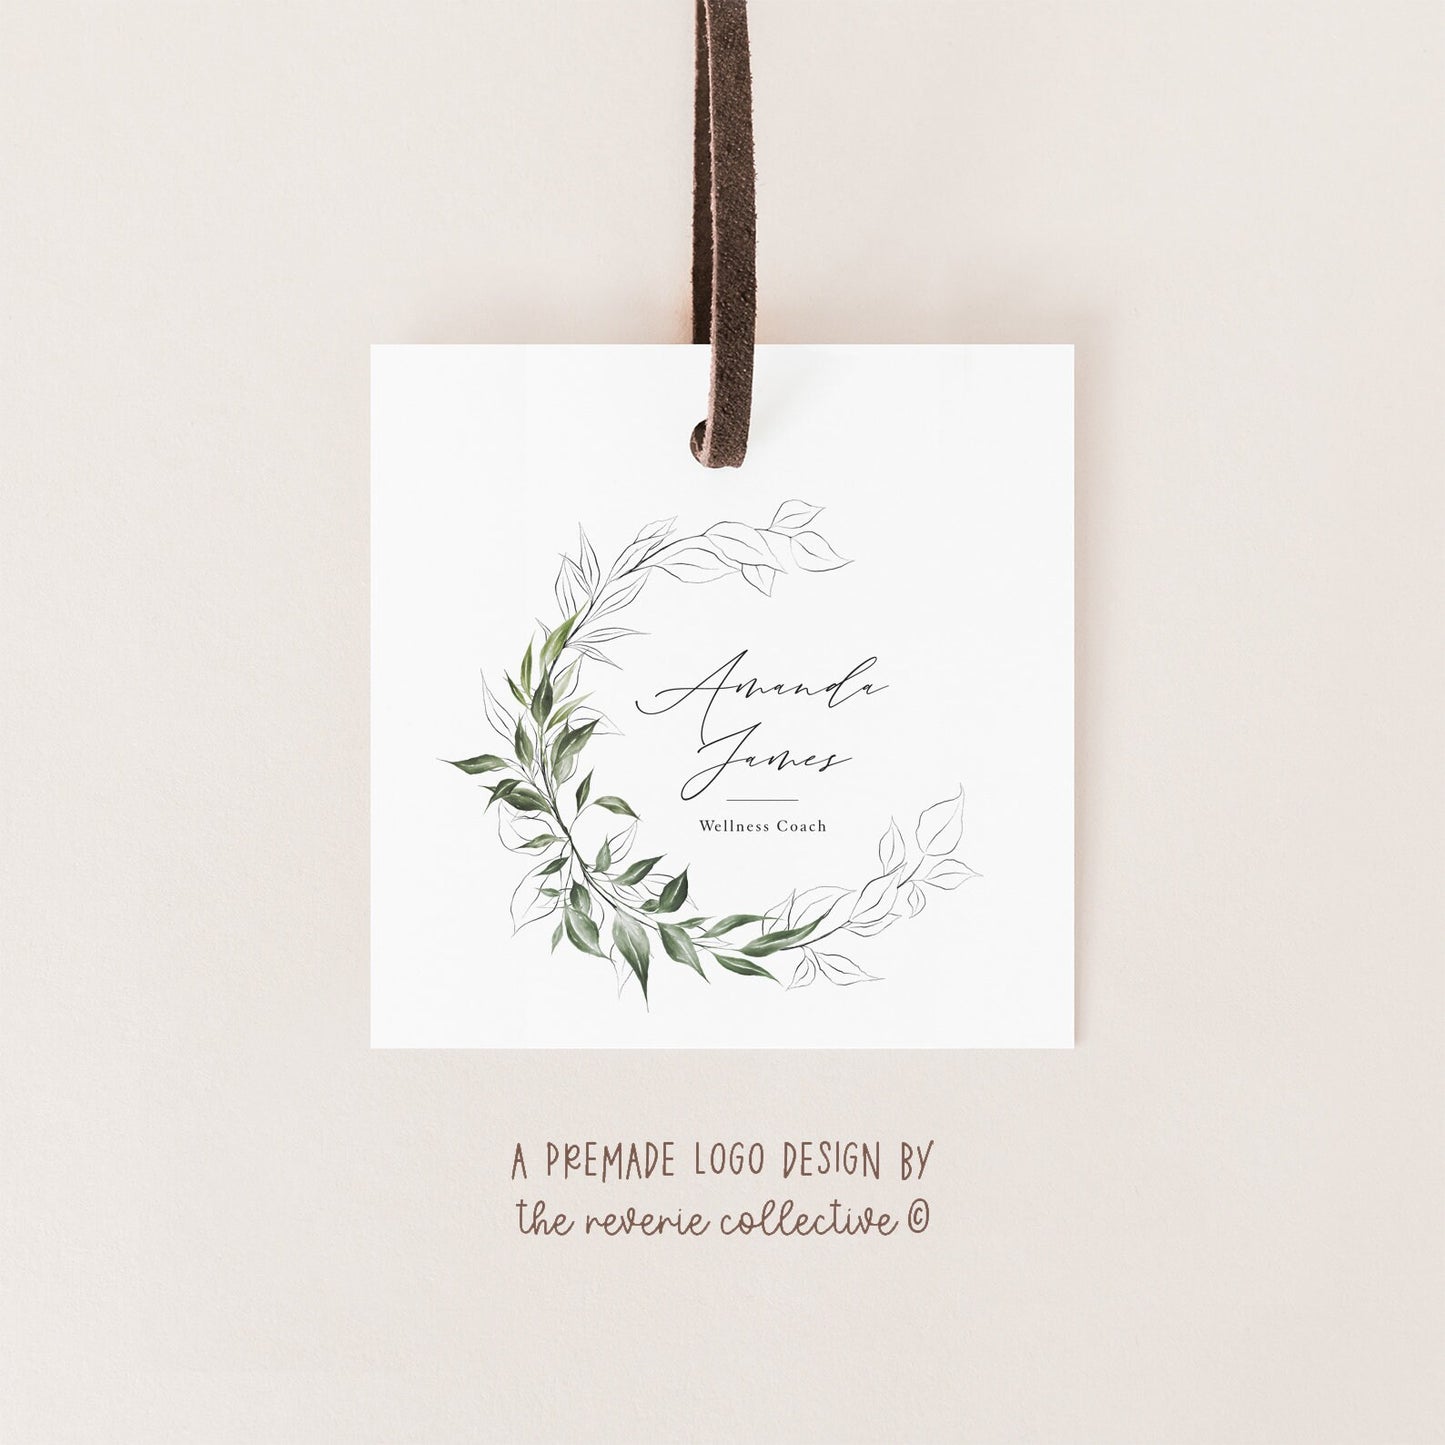 Amanda James | Premade Logo Design | Fine Art, Botanical, Pencil Sketch, Branch Wreath